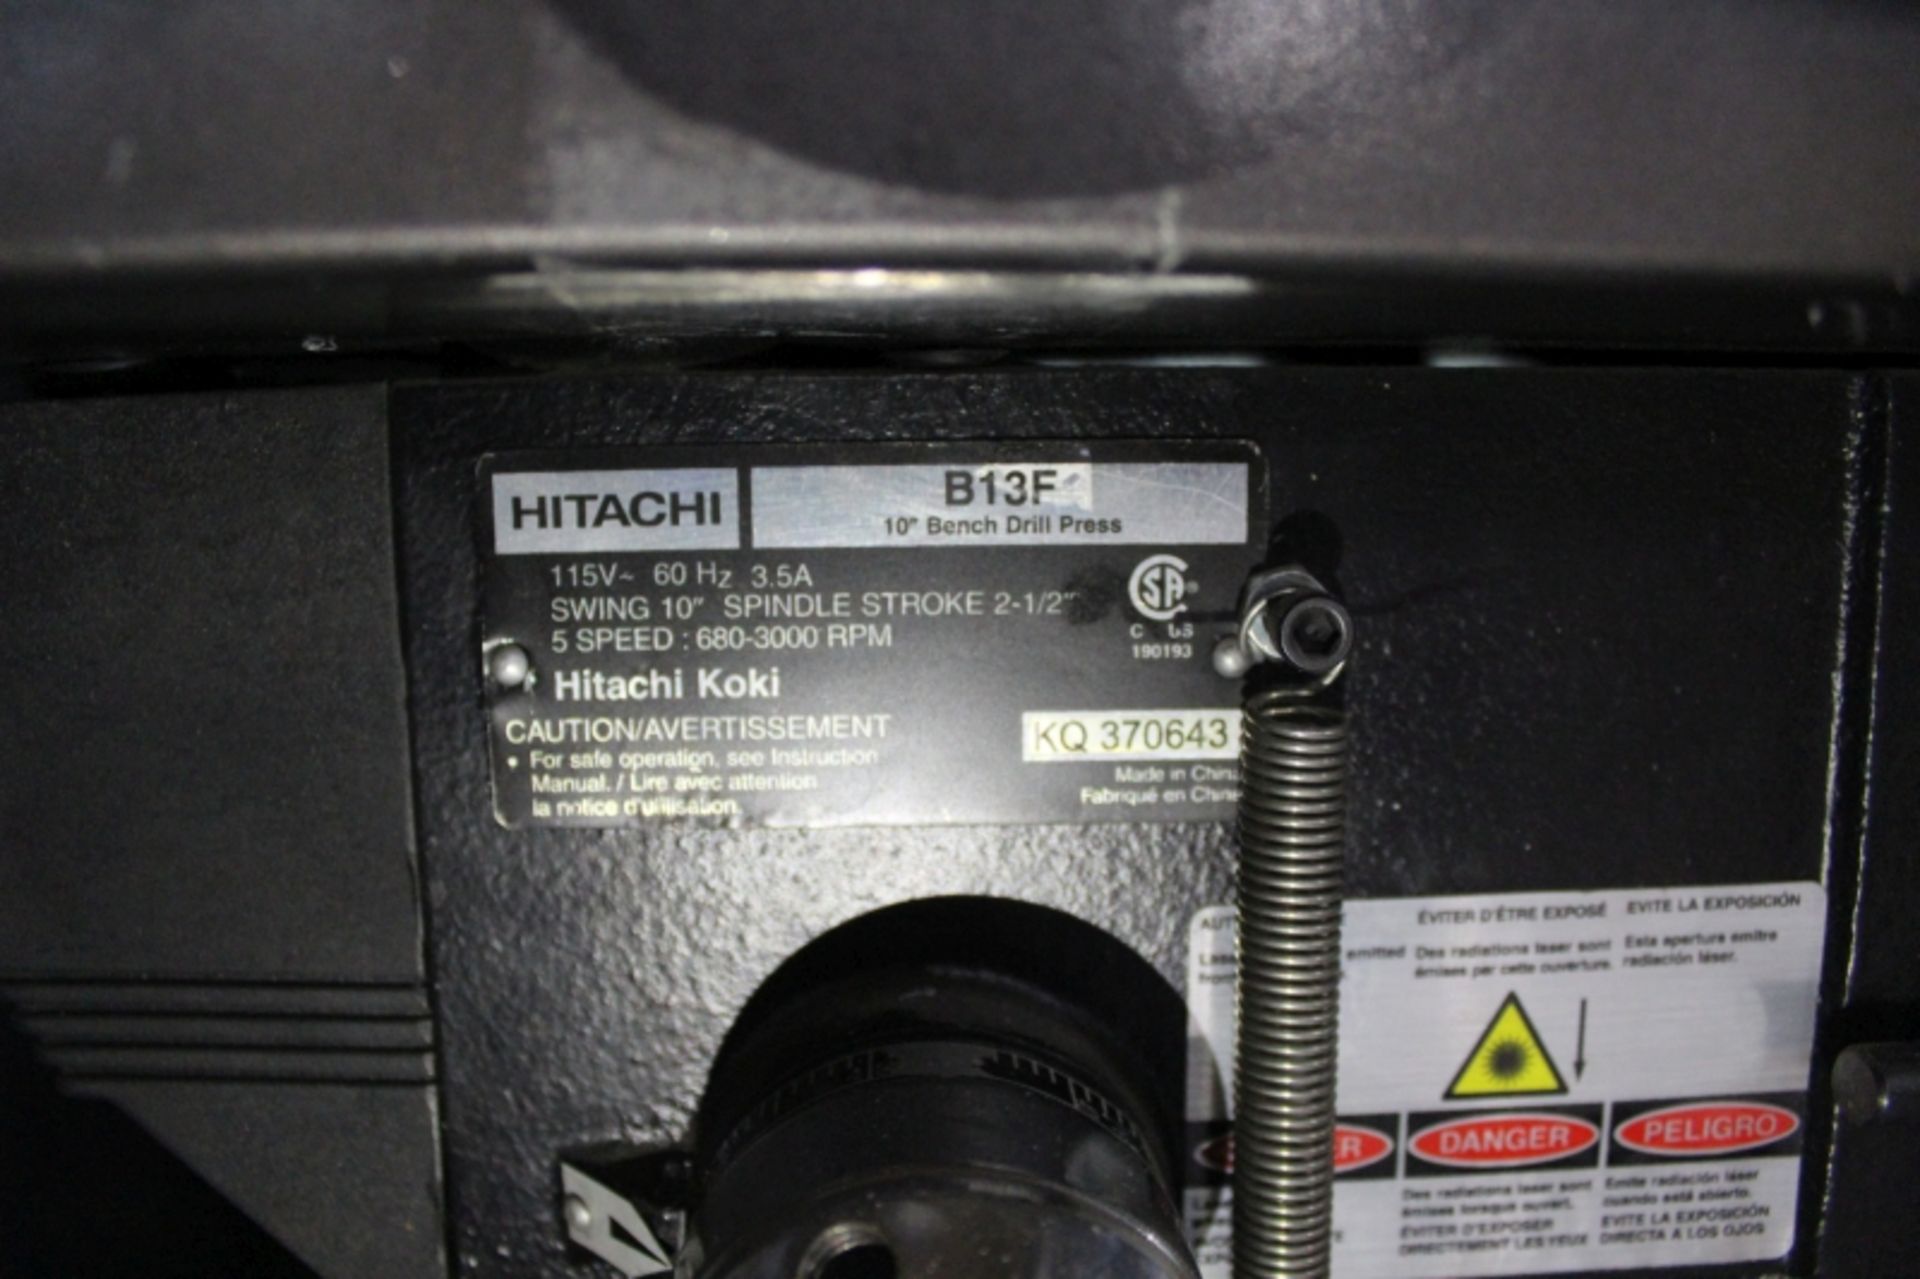 Hitachi B13F 10" Bench Drill Press, S/N KQ370643 - Image 4 of 4